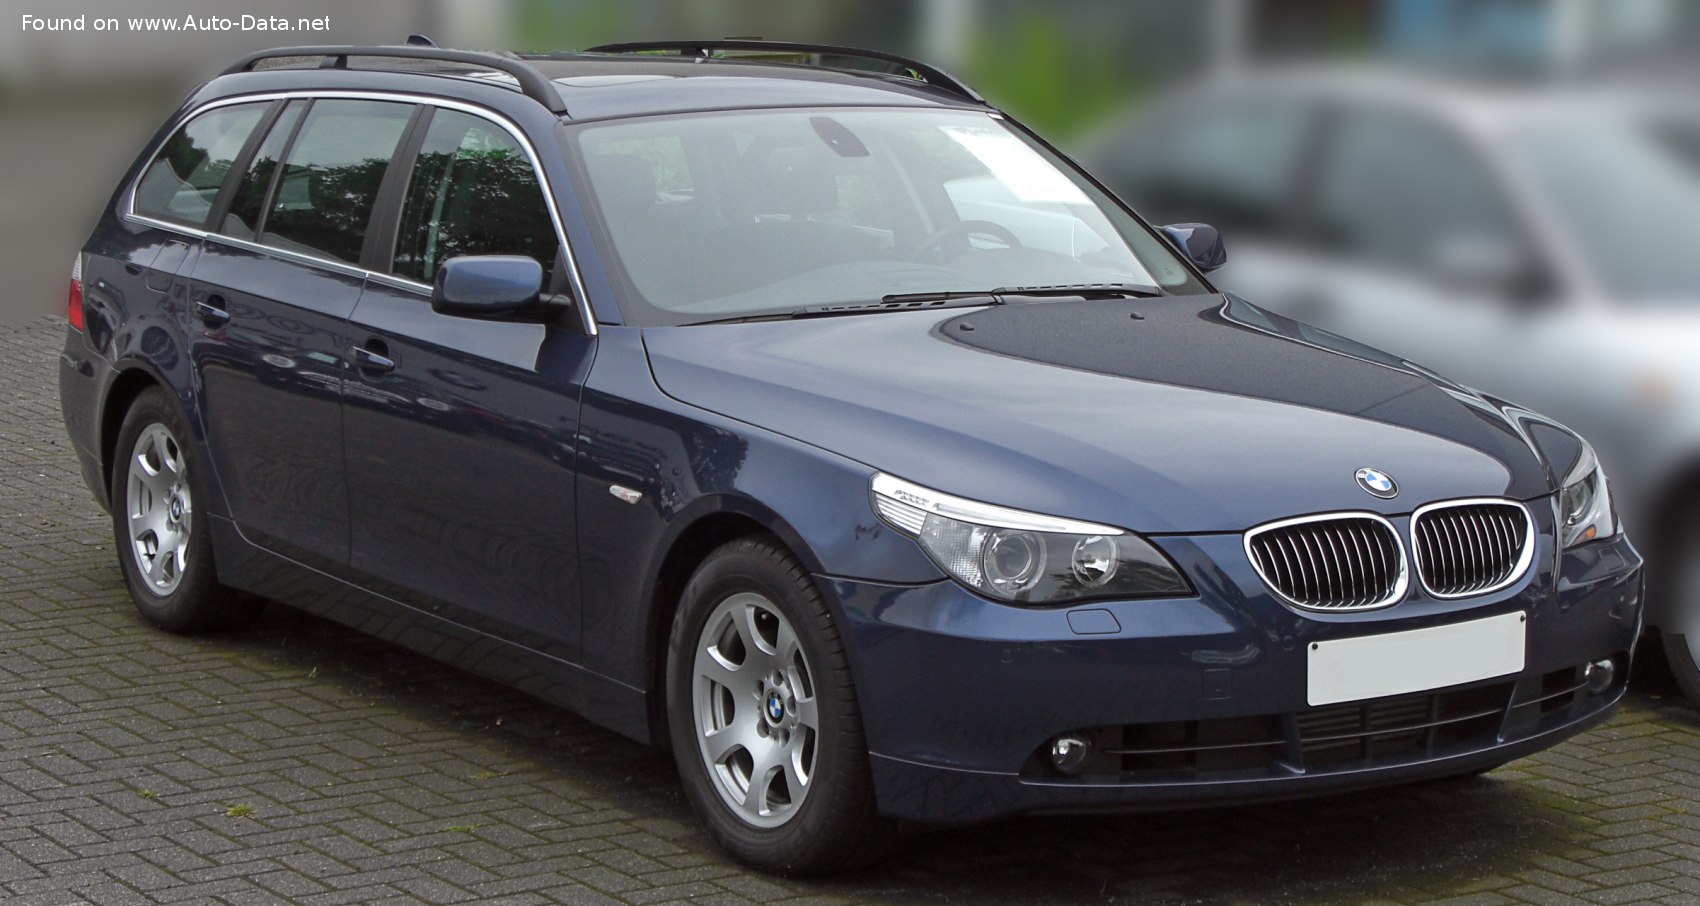 https://www.auto-data.net/images/f65/BMW-5-Series-Touring-E61.jpg